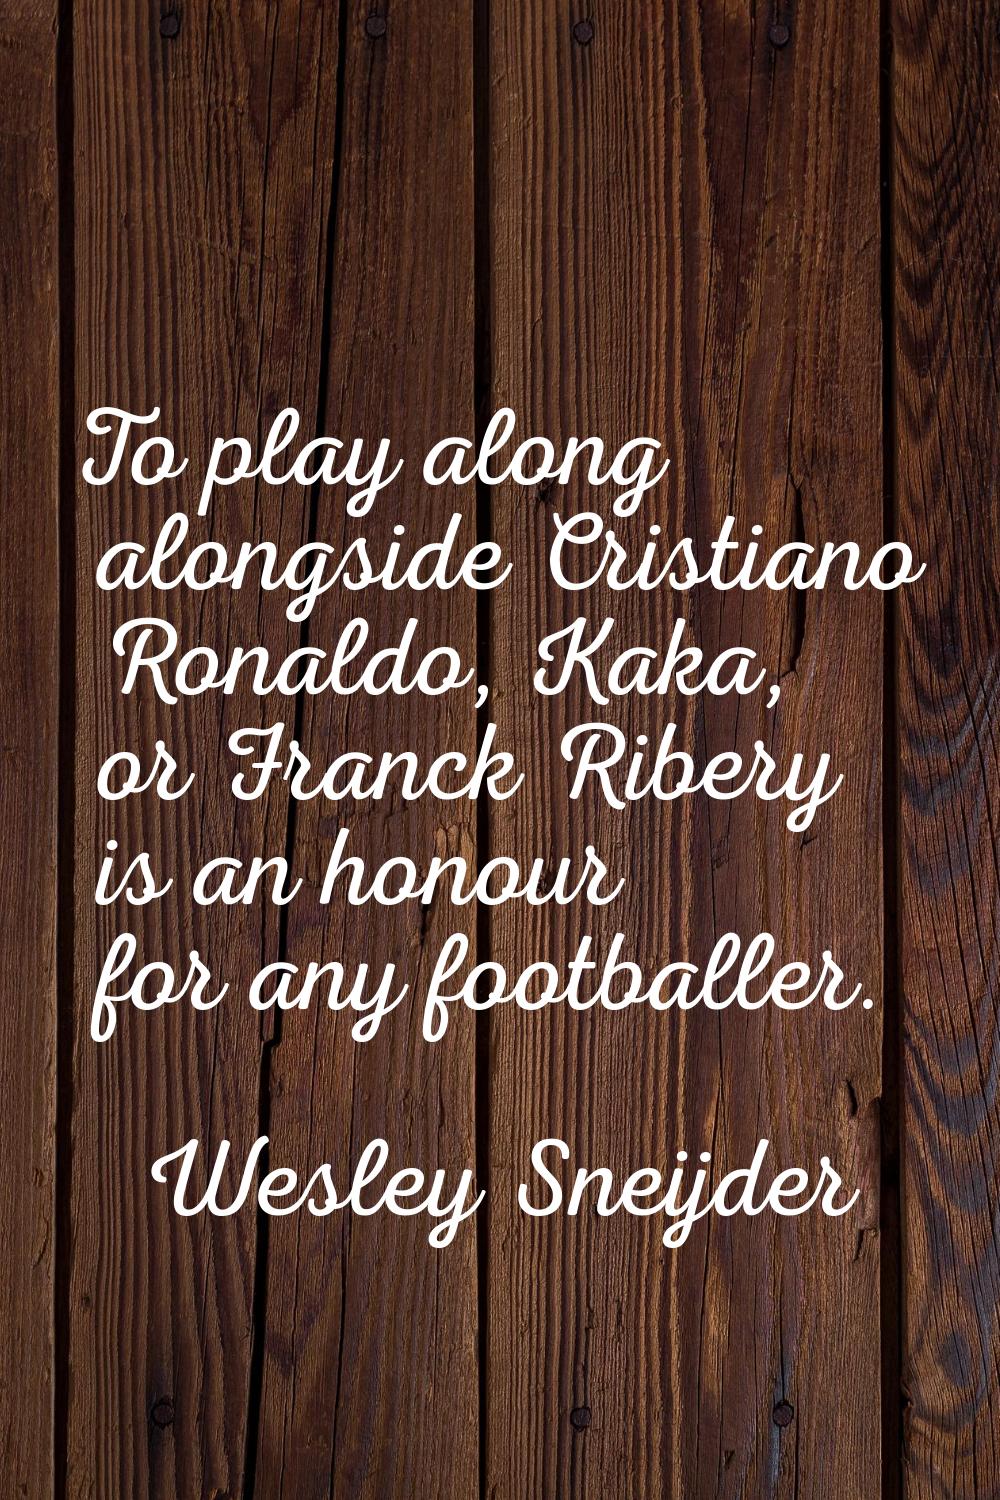 To play along alongside Cristiano Ronaldo, Kaka, or Franck Ribery is an honour for any footballer.